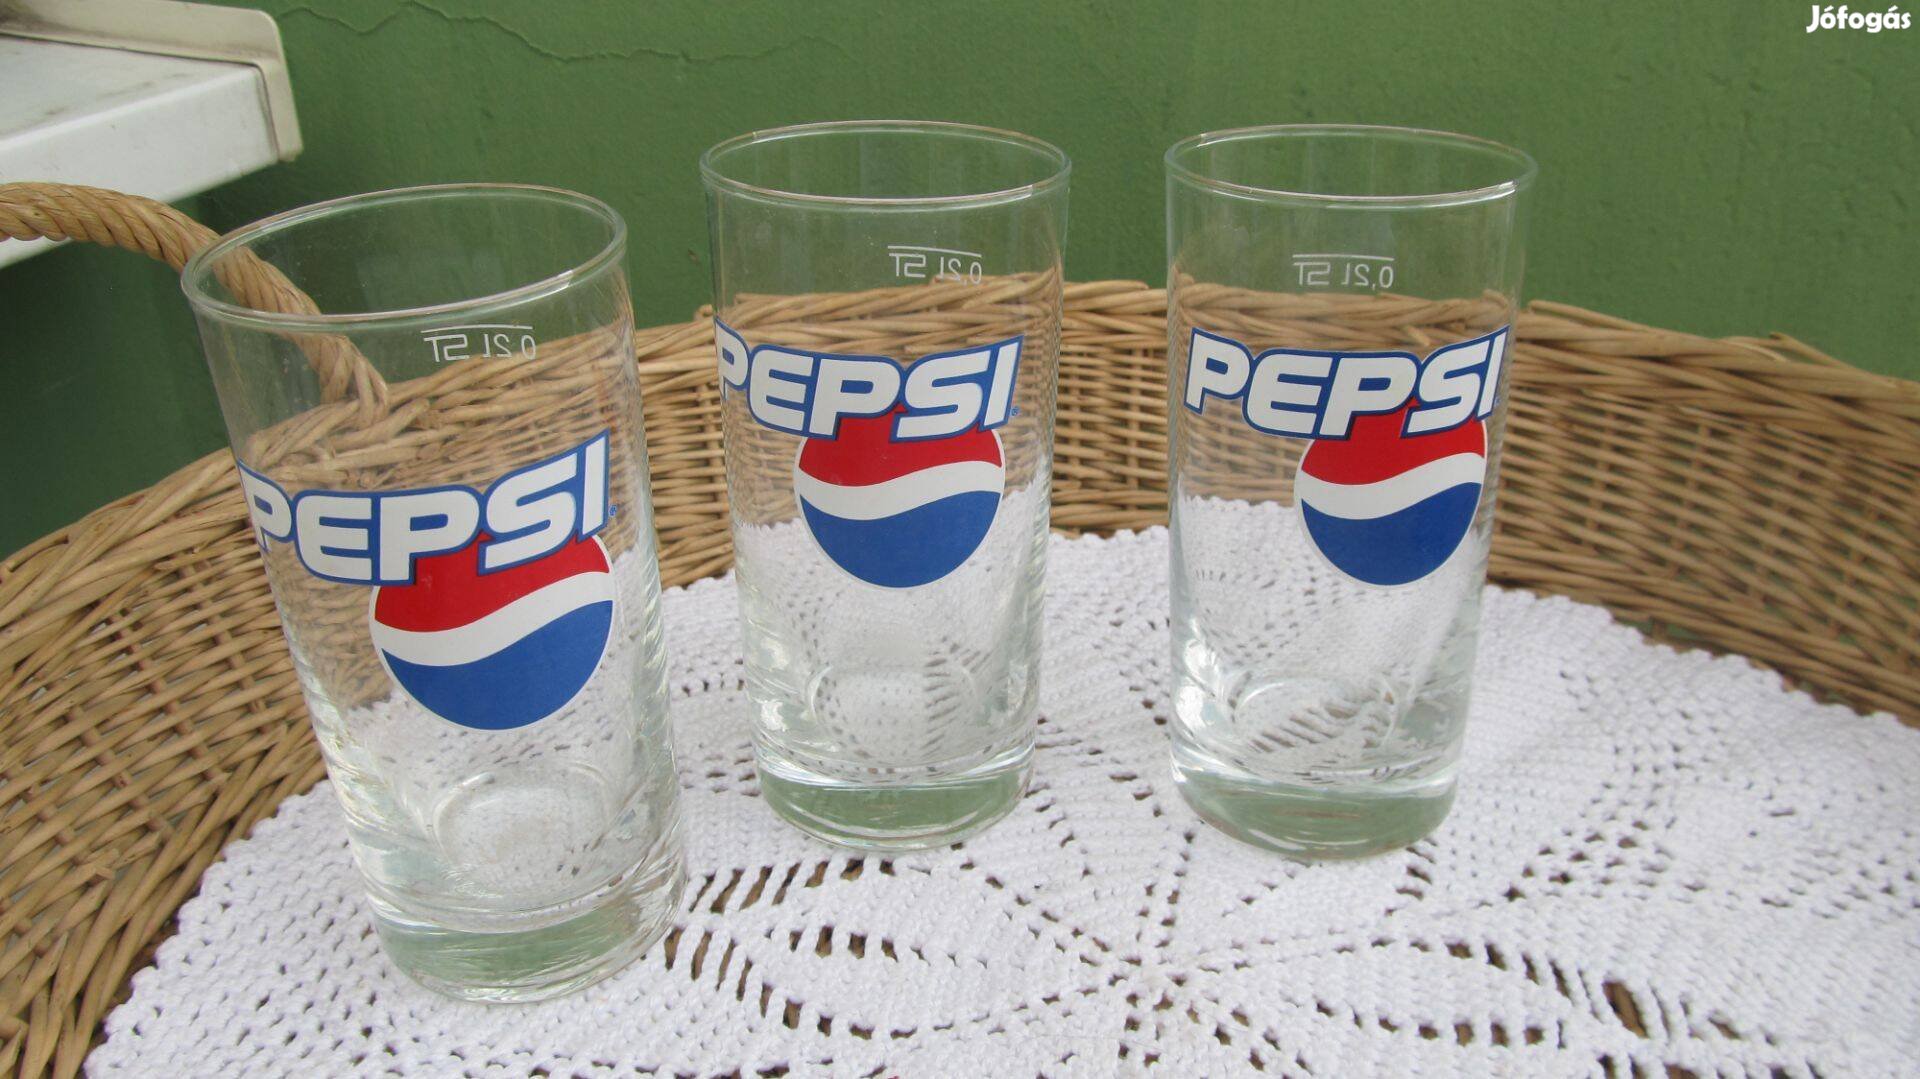 0,2 L-es Pepsis poharak